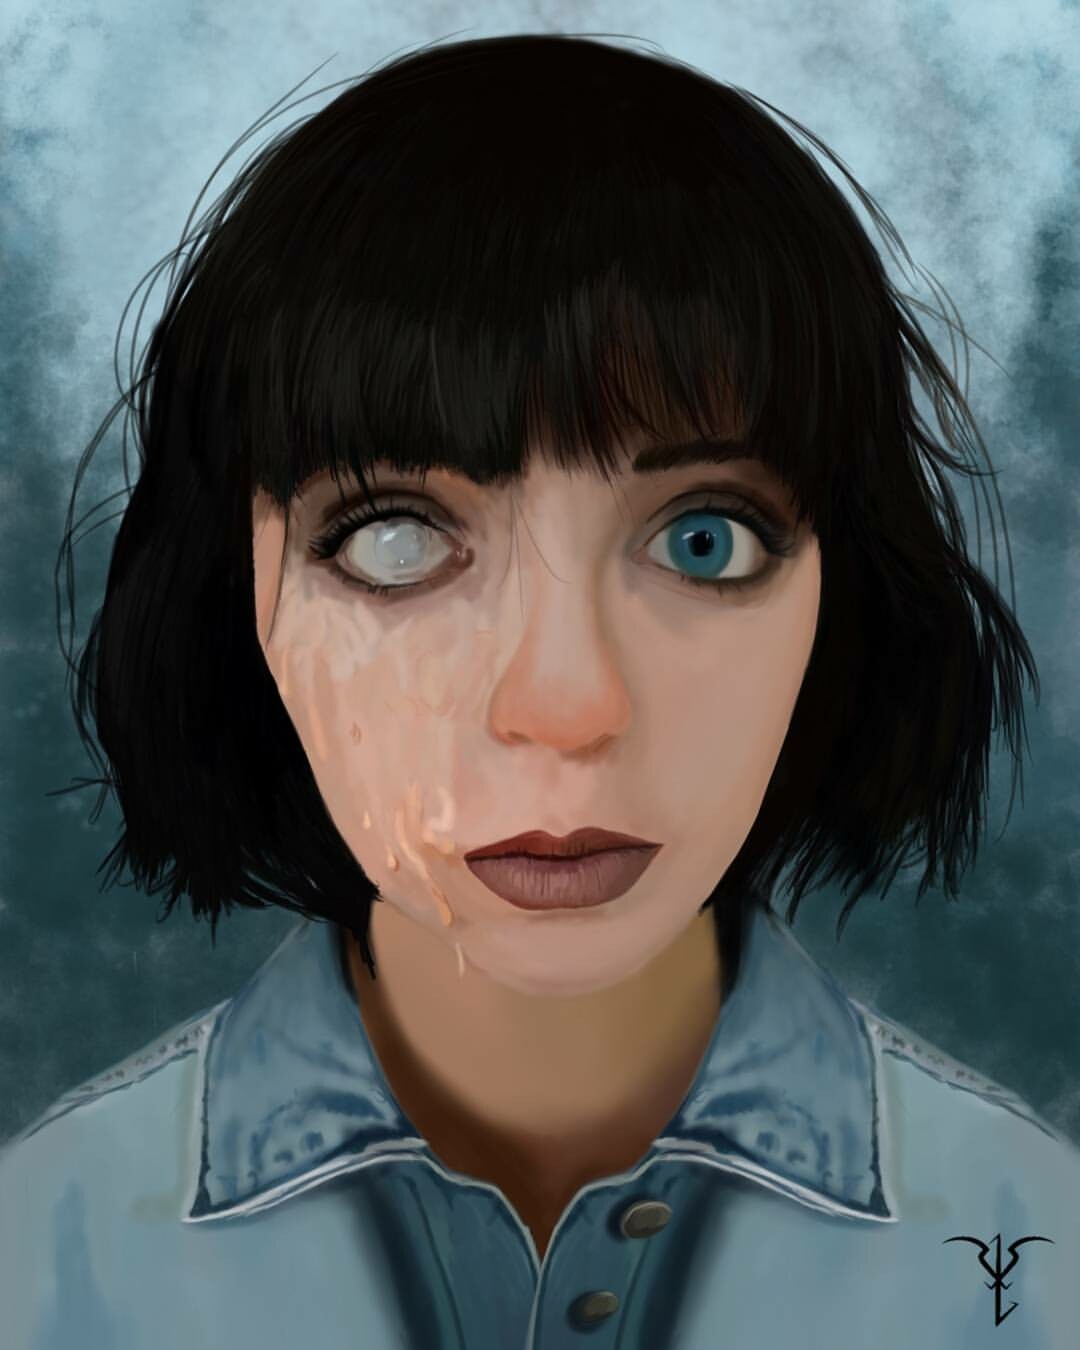 ArtStation - Makeup artist turned into a digital portrait (Digital Art)